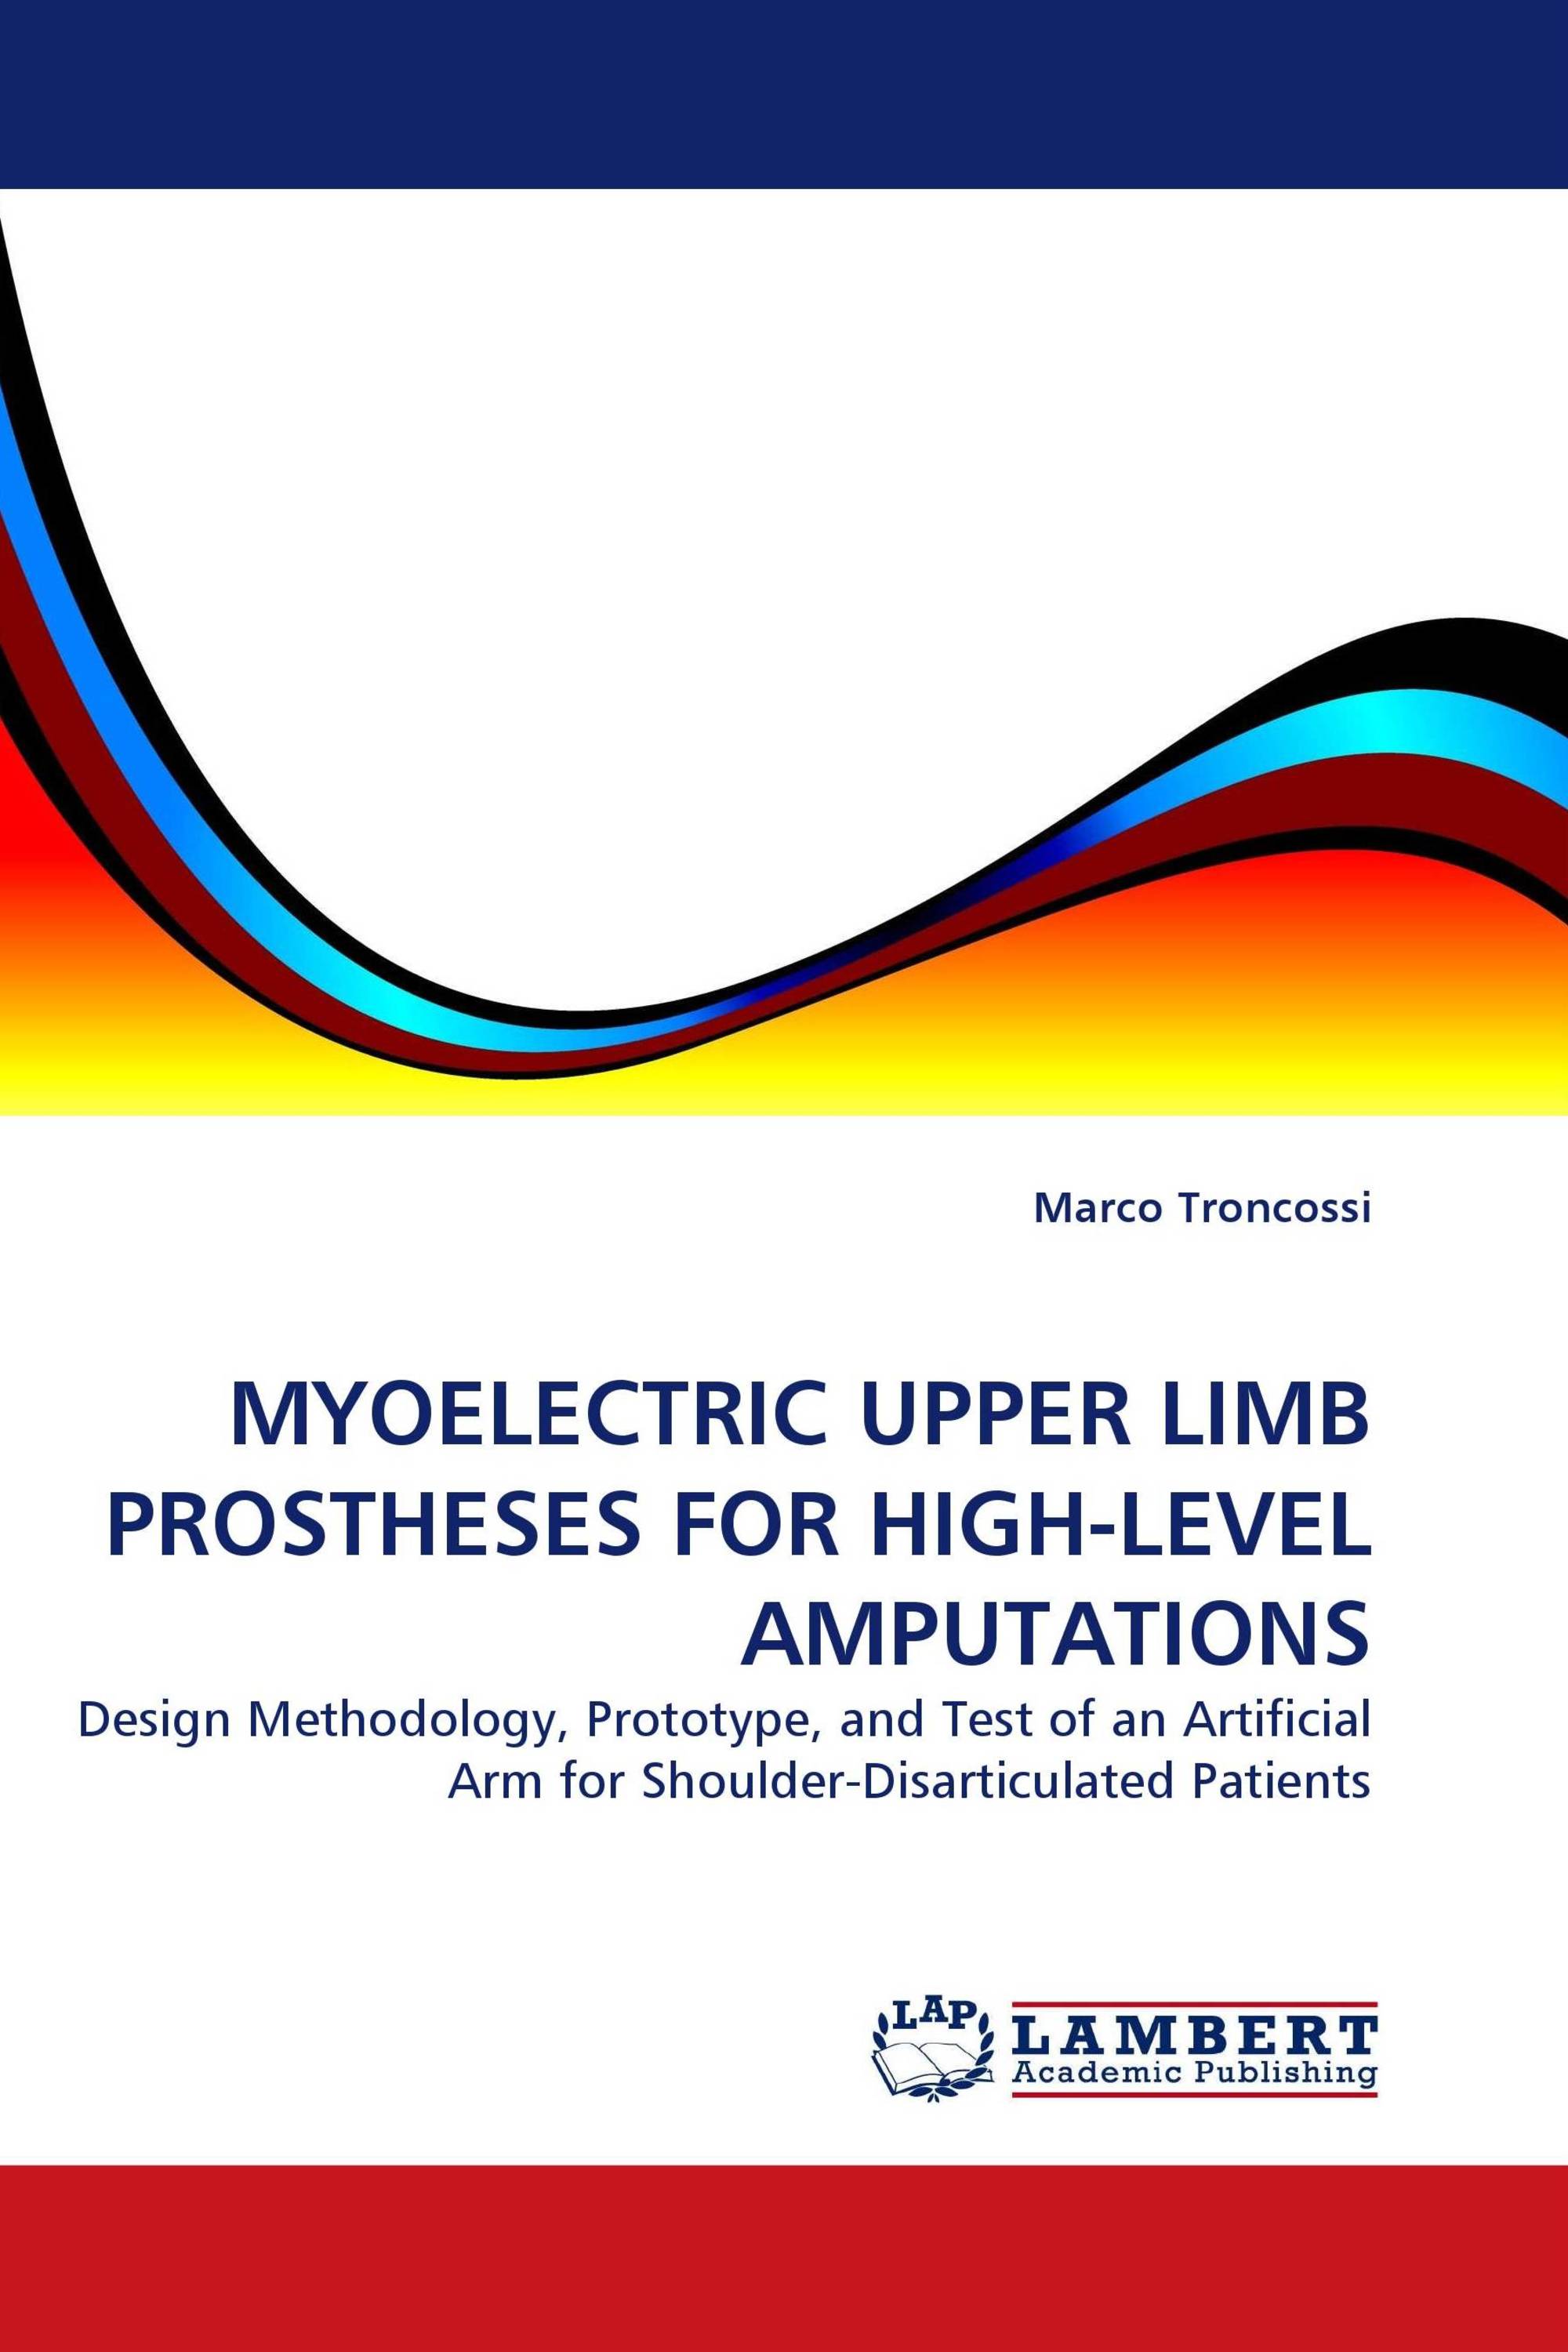 MYOELECTRIC UPPER LIMB PROSTHESES FOR HIGH-LEVEL AMPUTATIONS